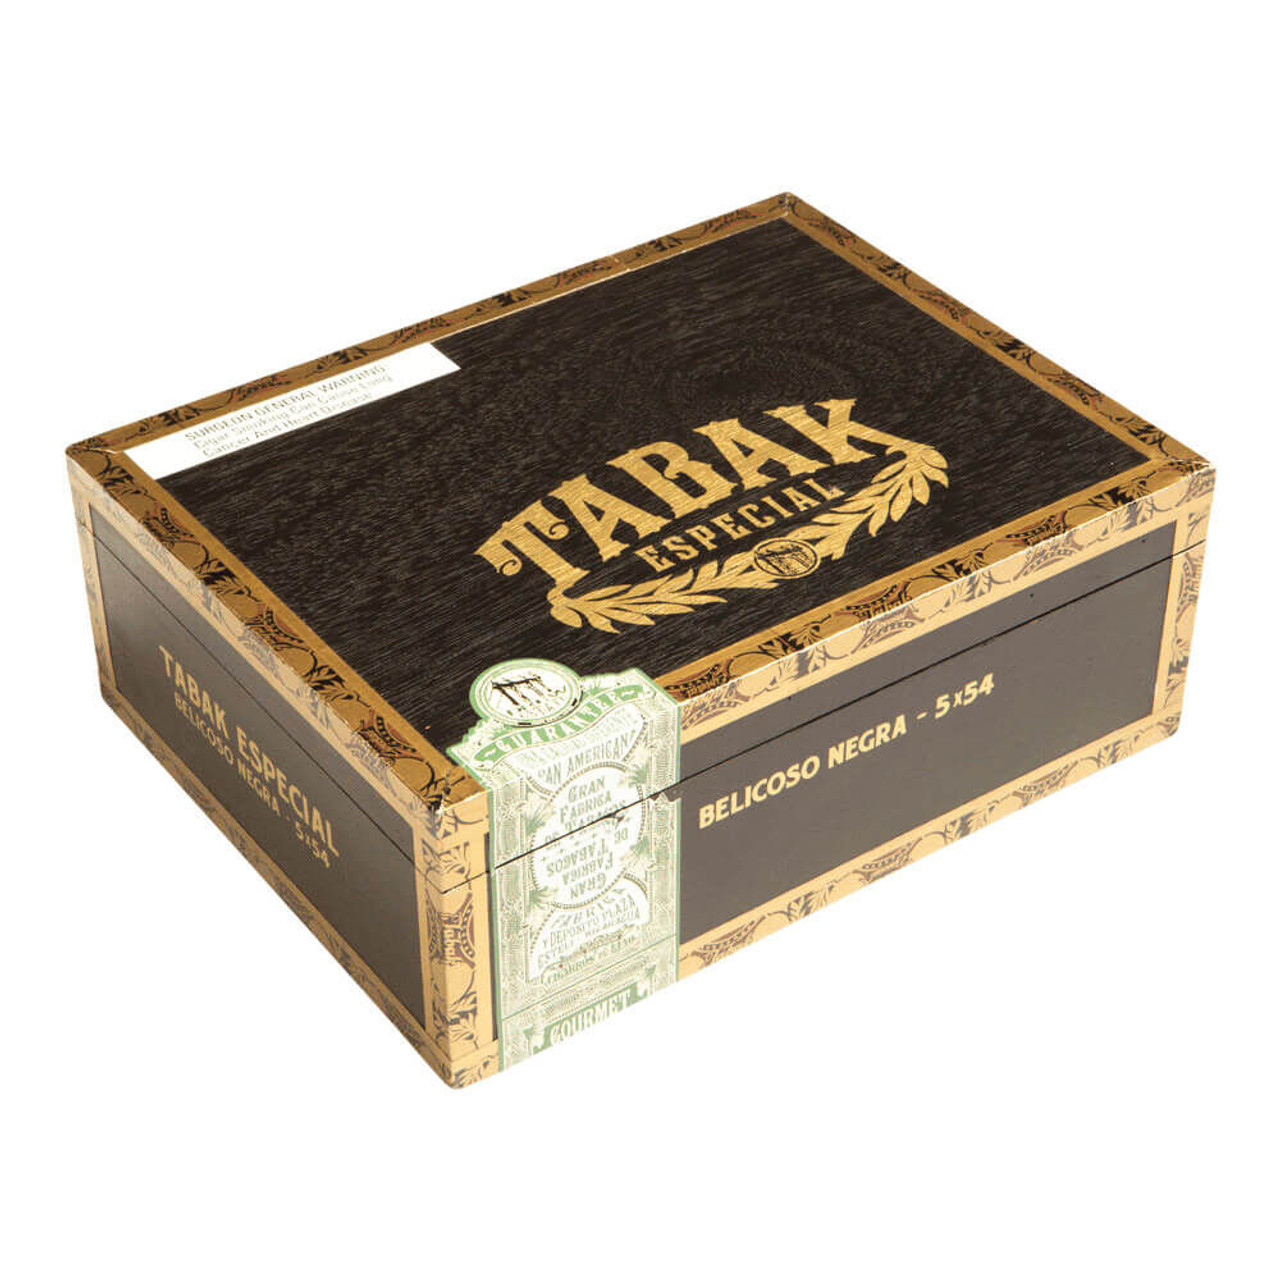 Tabak Especial by Drew Estate Belicoso Negra Cigars - 5 x 54 (Box of 24) *Box